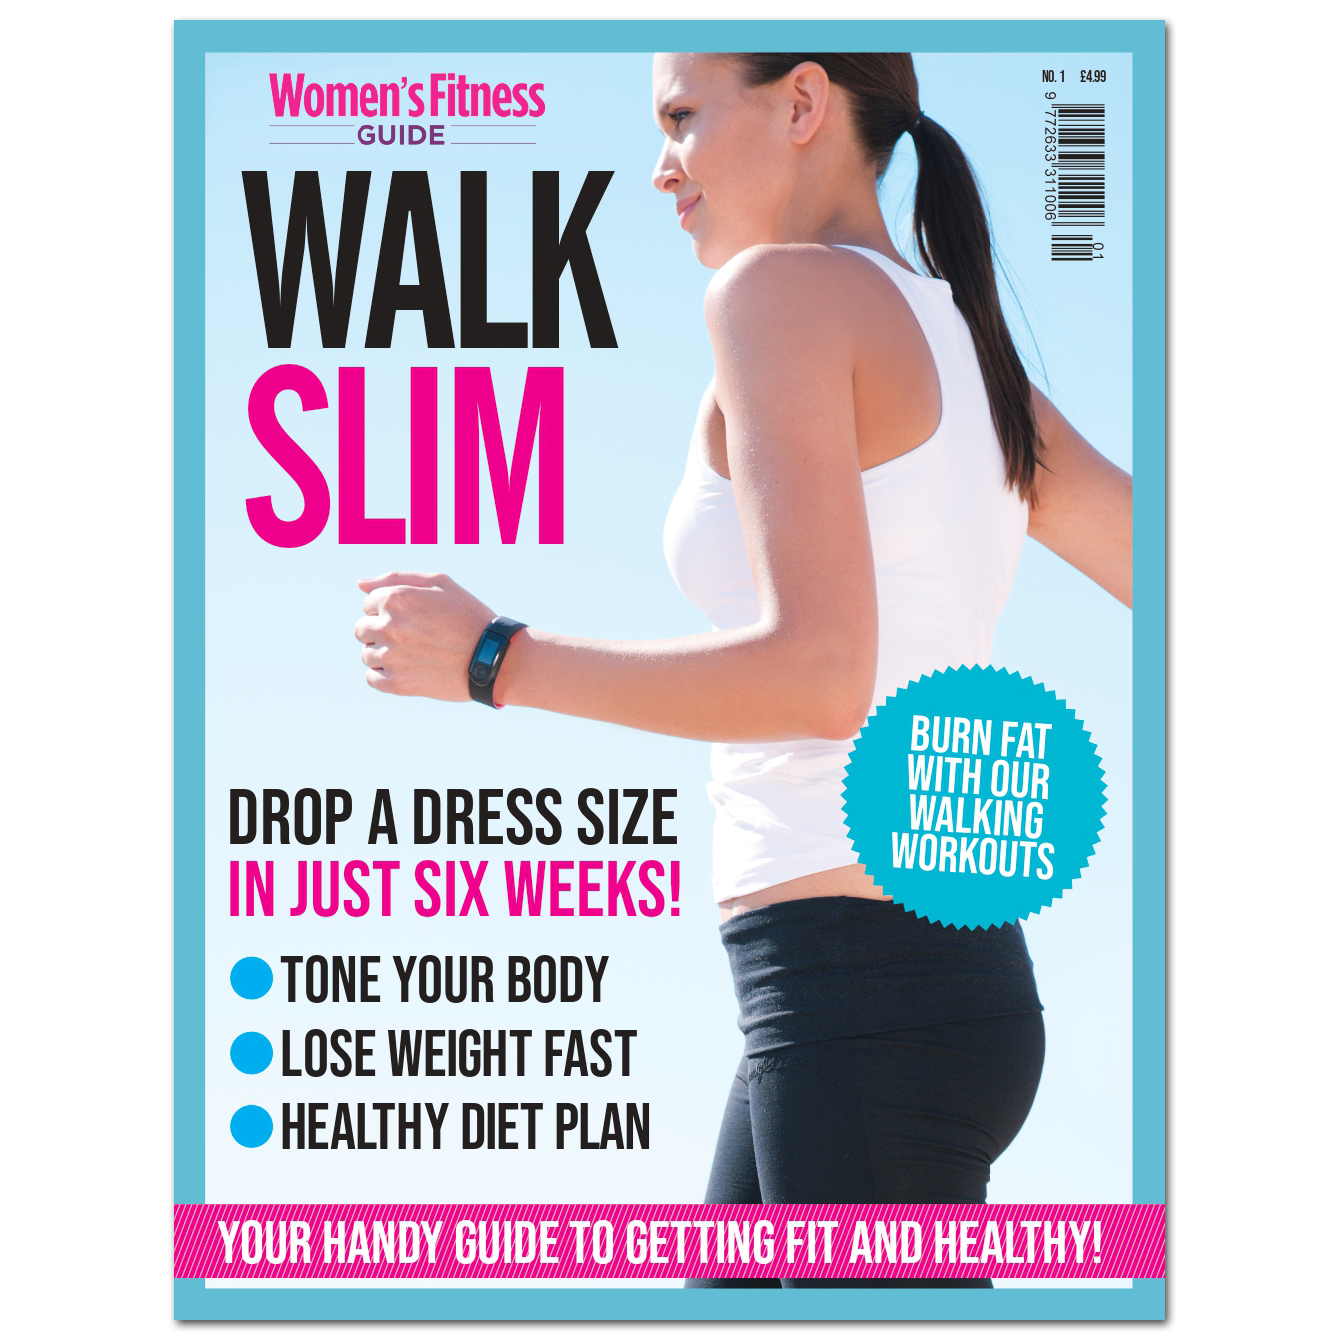 Women's Fitness Guide #1 Walk Slim